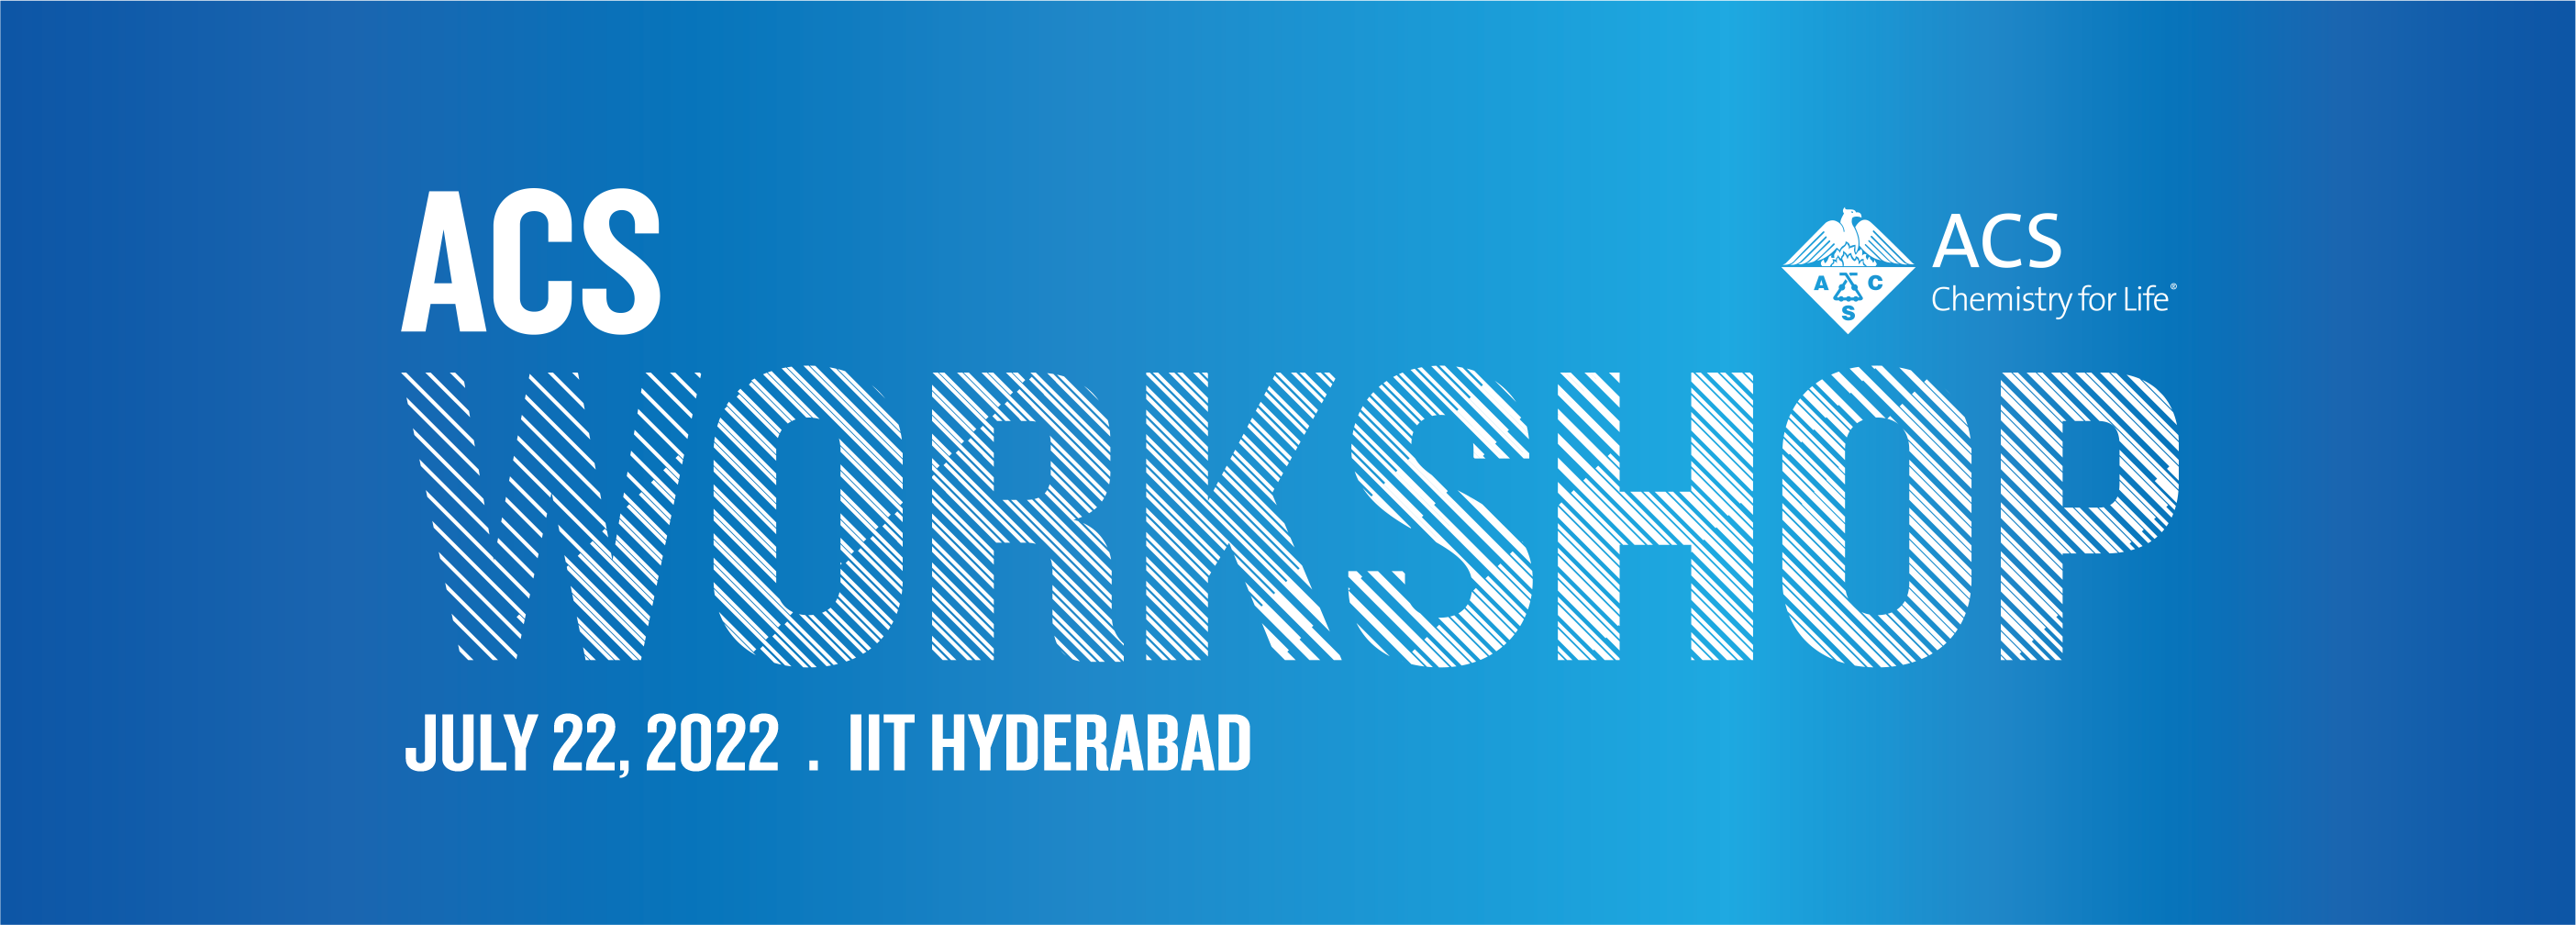 ACS Workshop July 22, 2022 | IIT Hyderabad